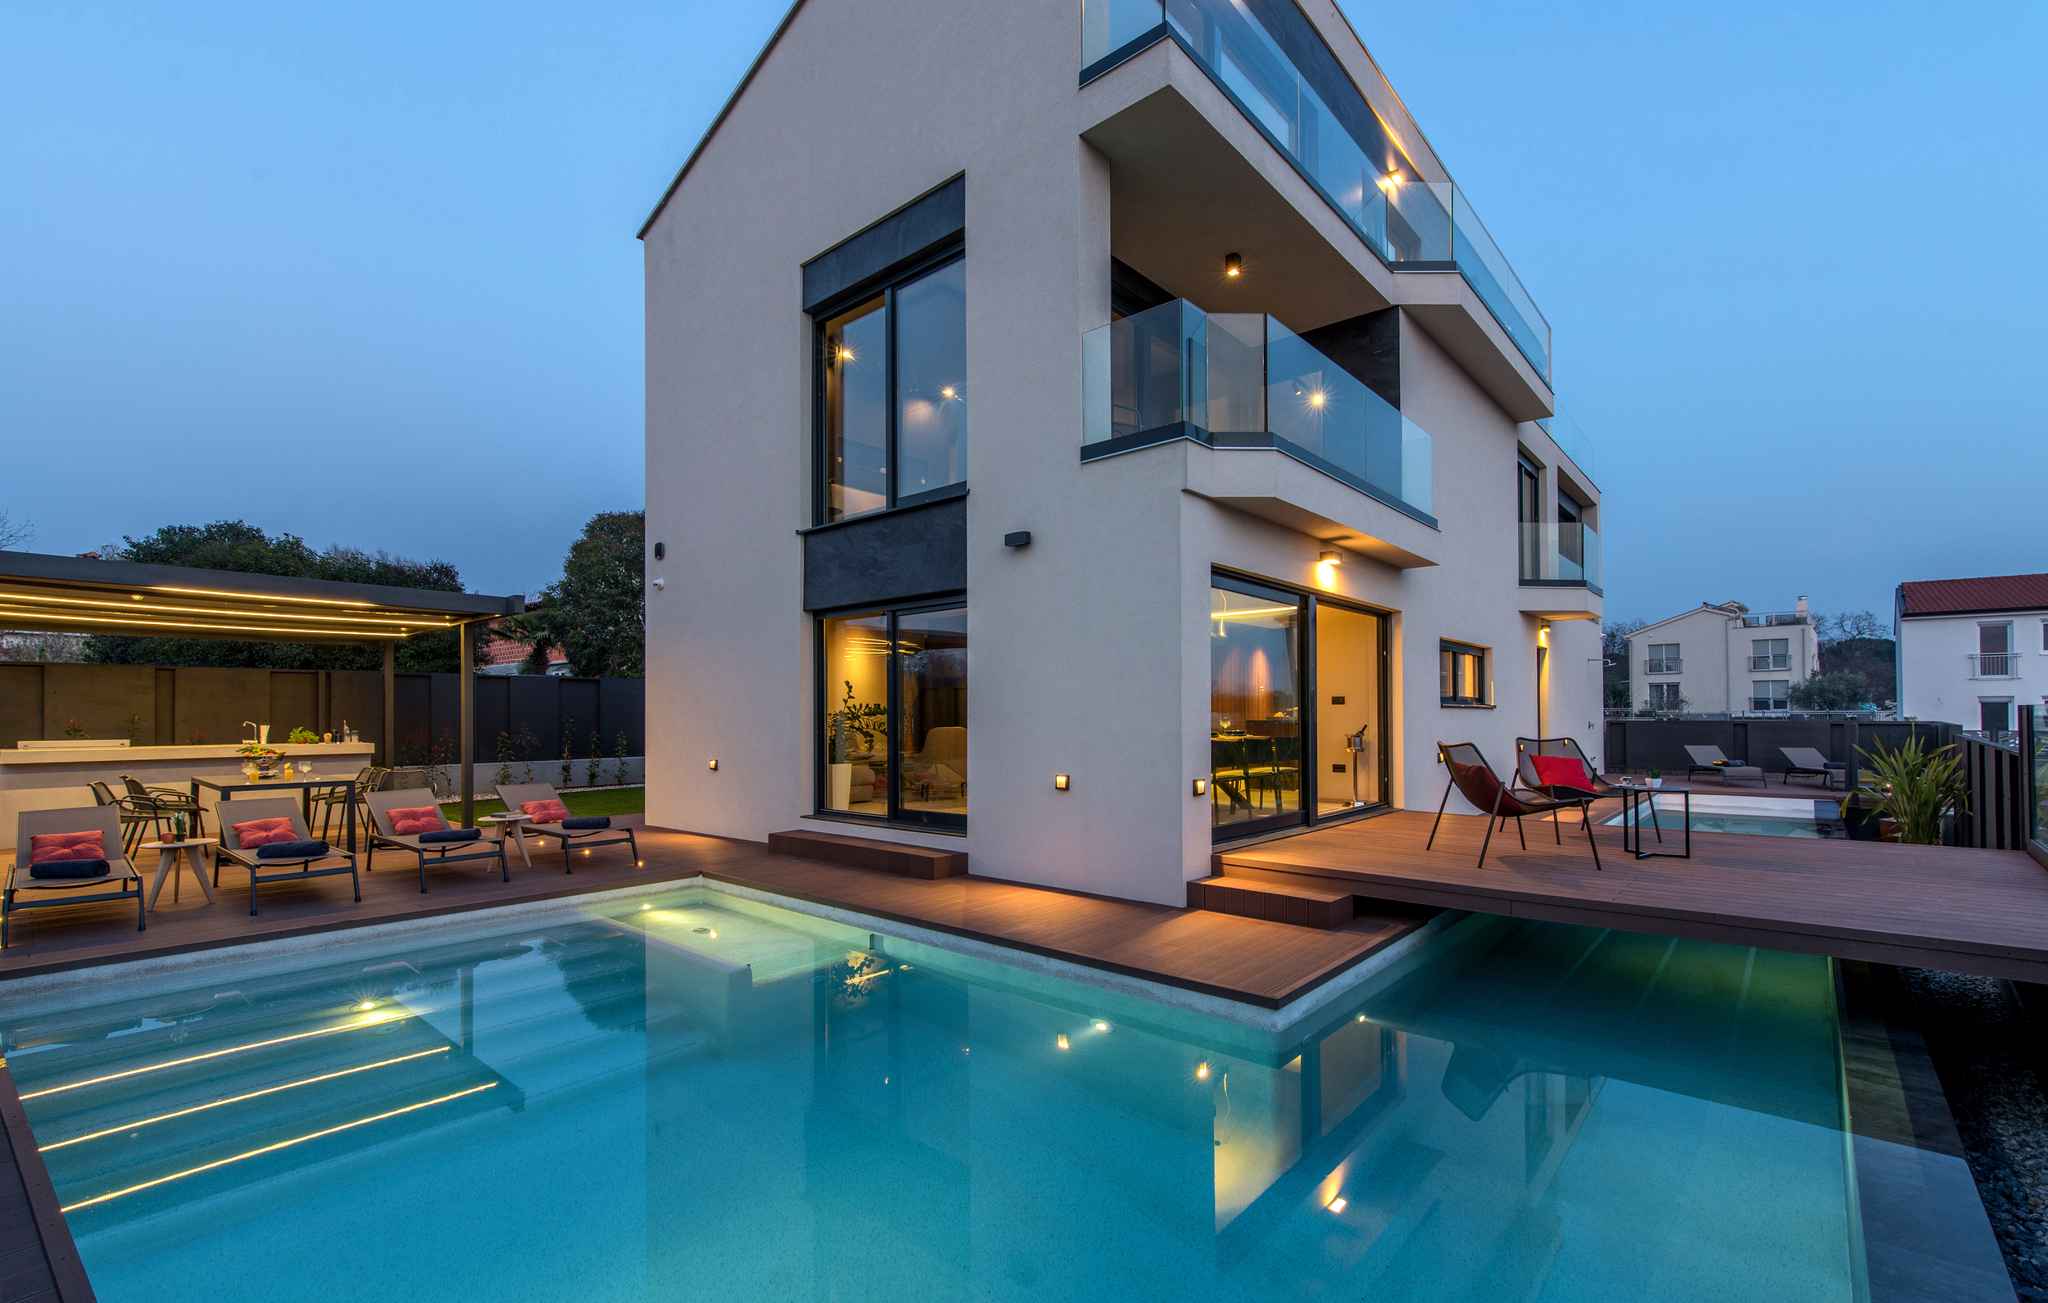 Villa mit Pool in Strandnähe Ferienhaus in Europa